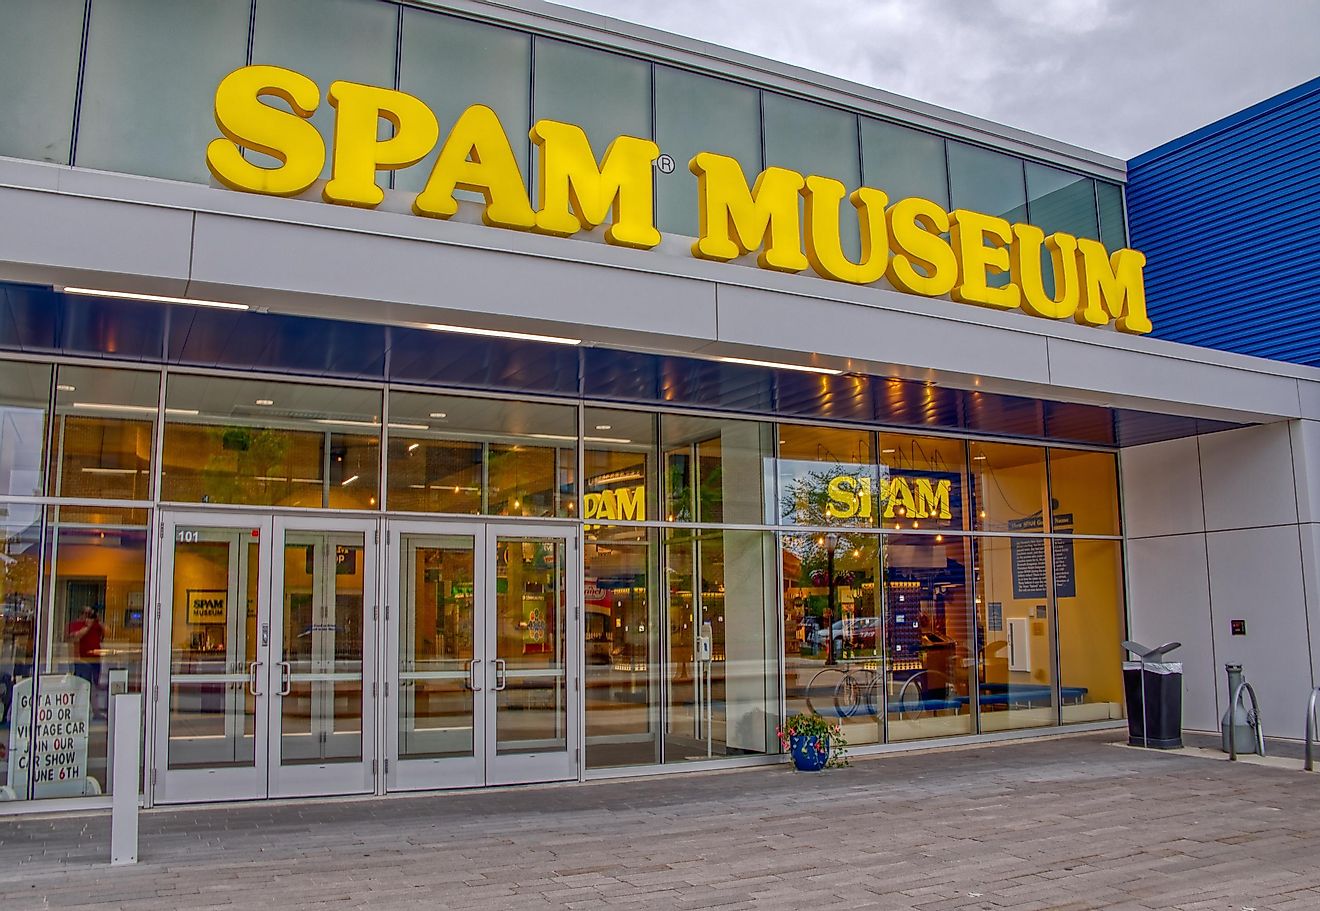 Spam museoum. Image credit: Jacob Boomsma / Shutterstock.com